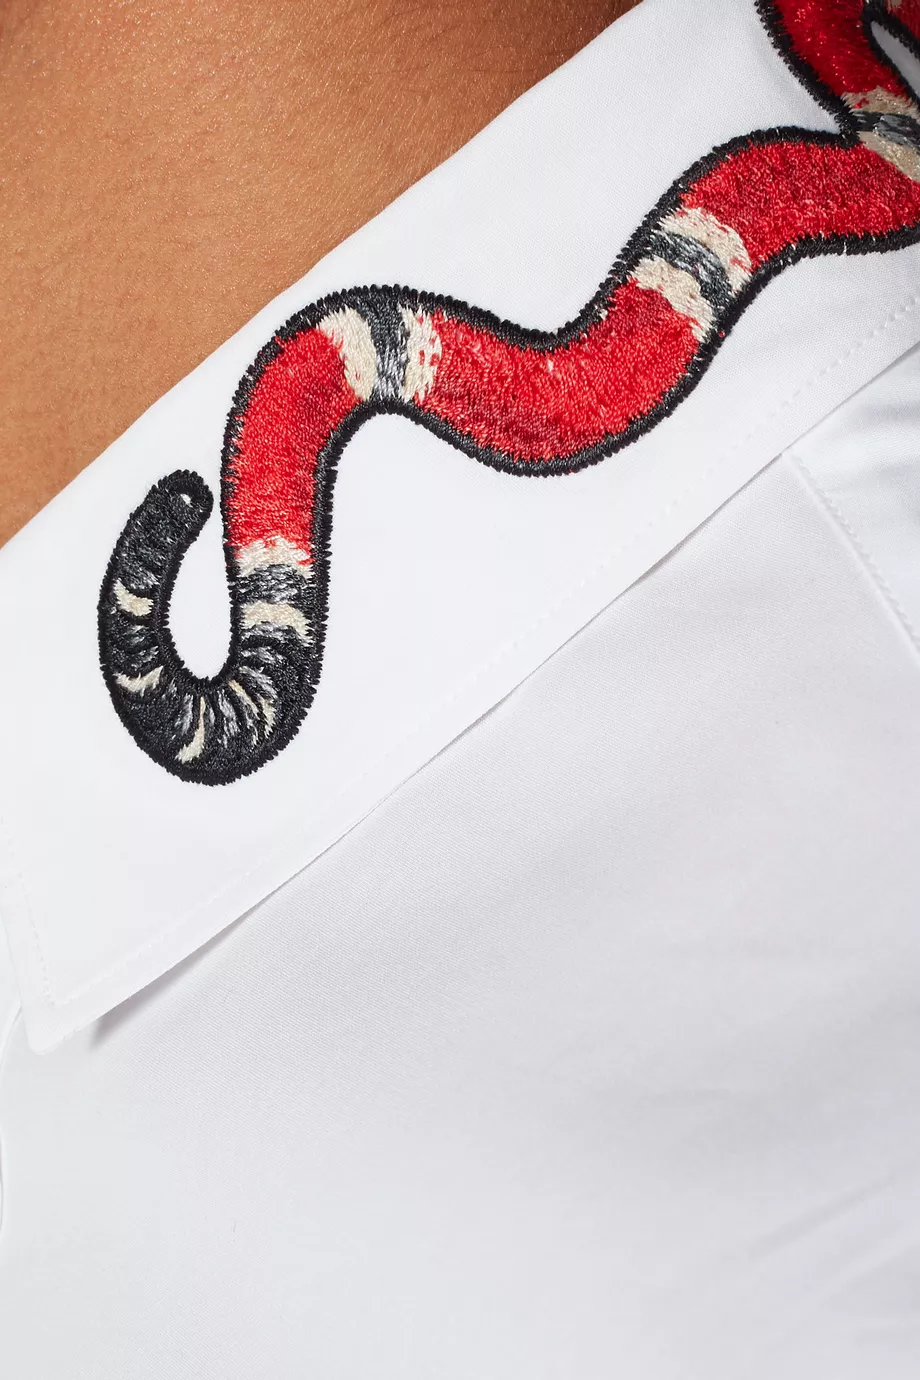 Gucci Cotton Duke Shirt With Snake - Farfetch